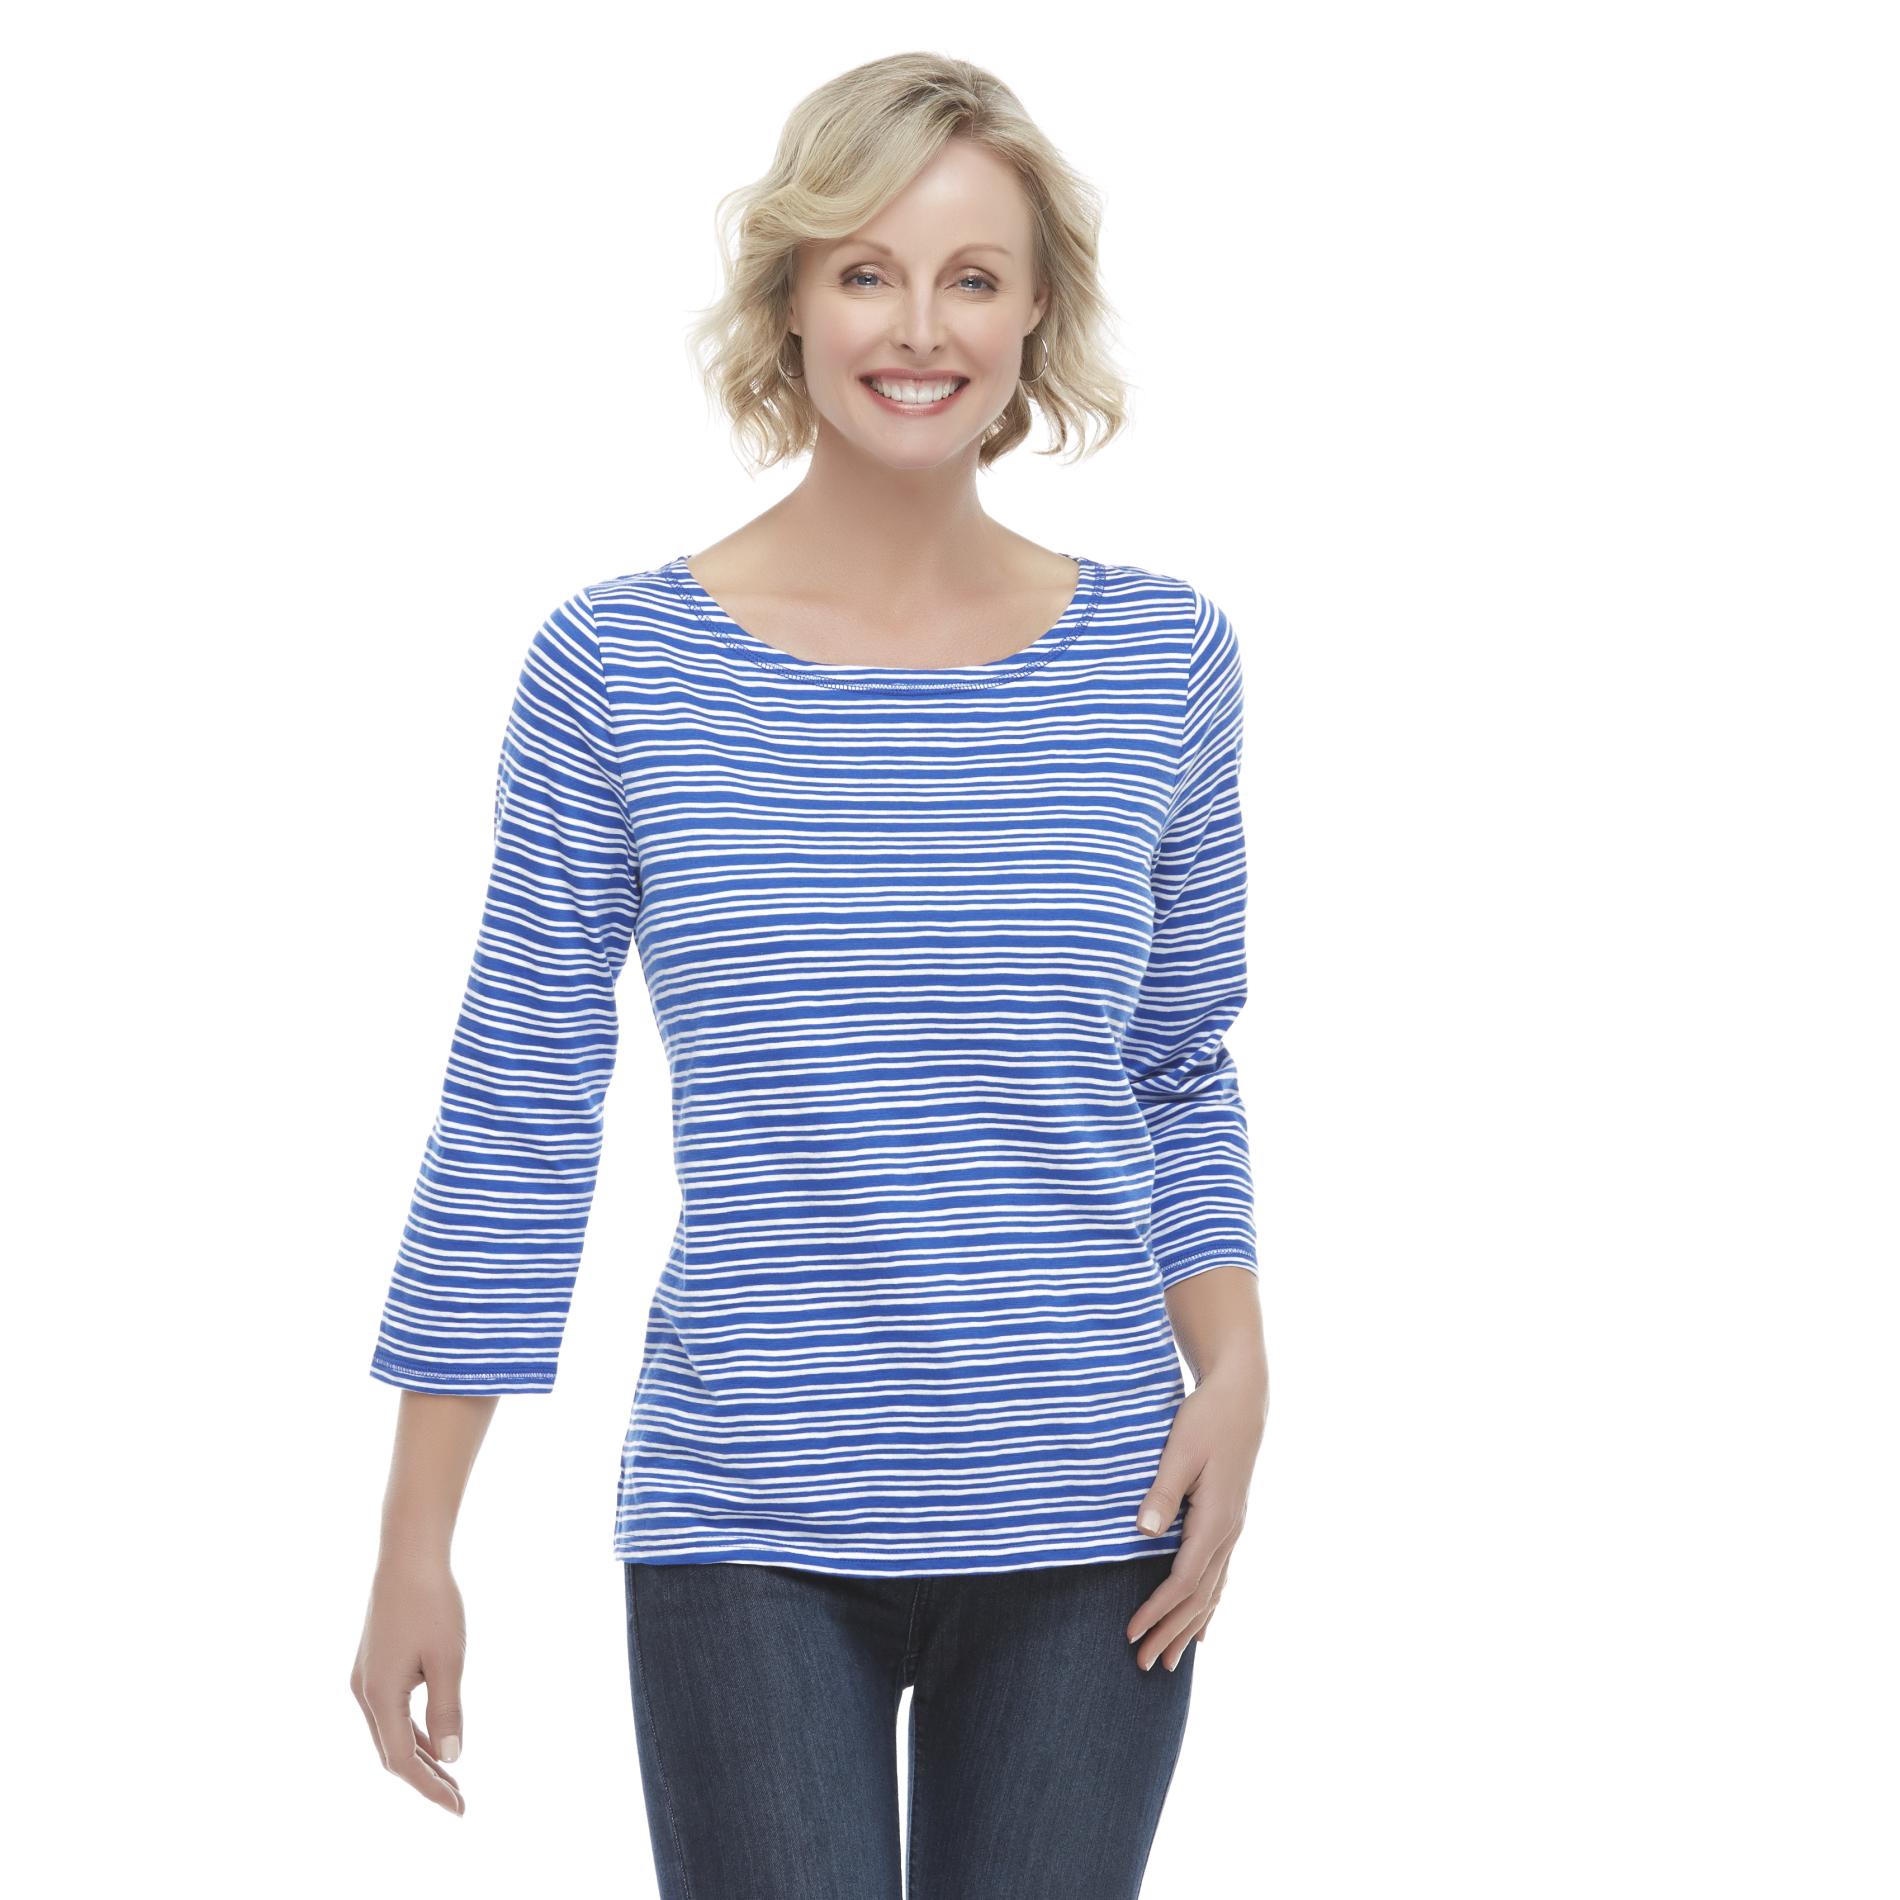 Basic Editions Women's Slub Knit T-Shirt - Striped